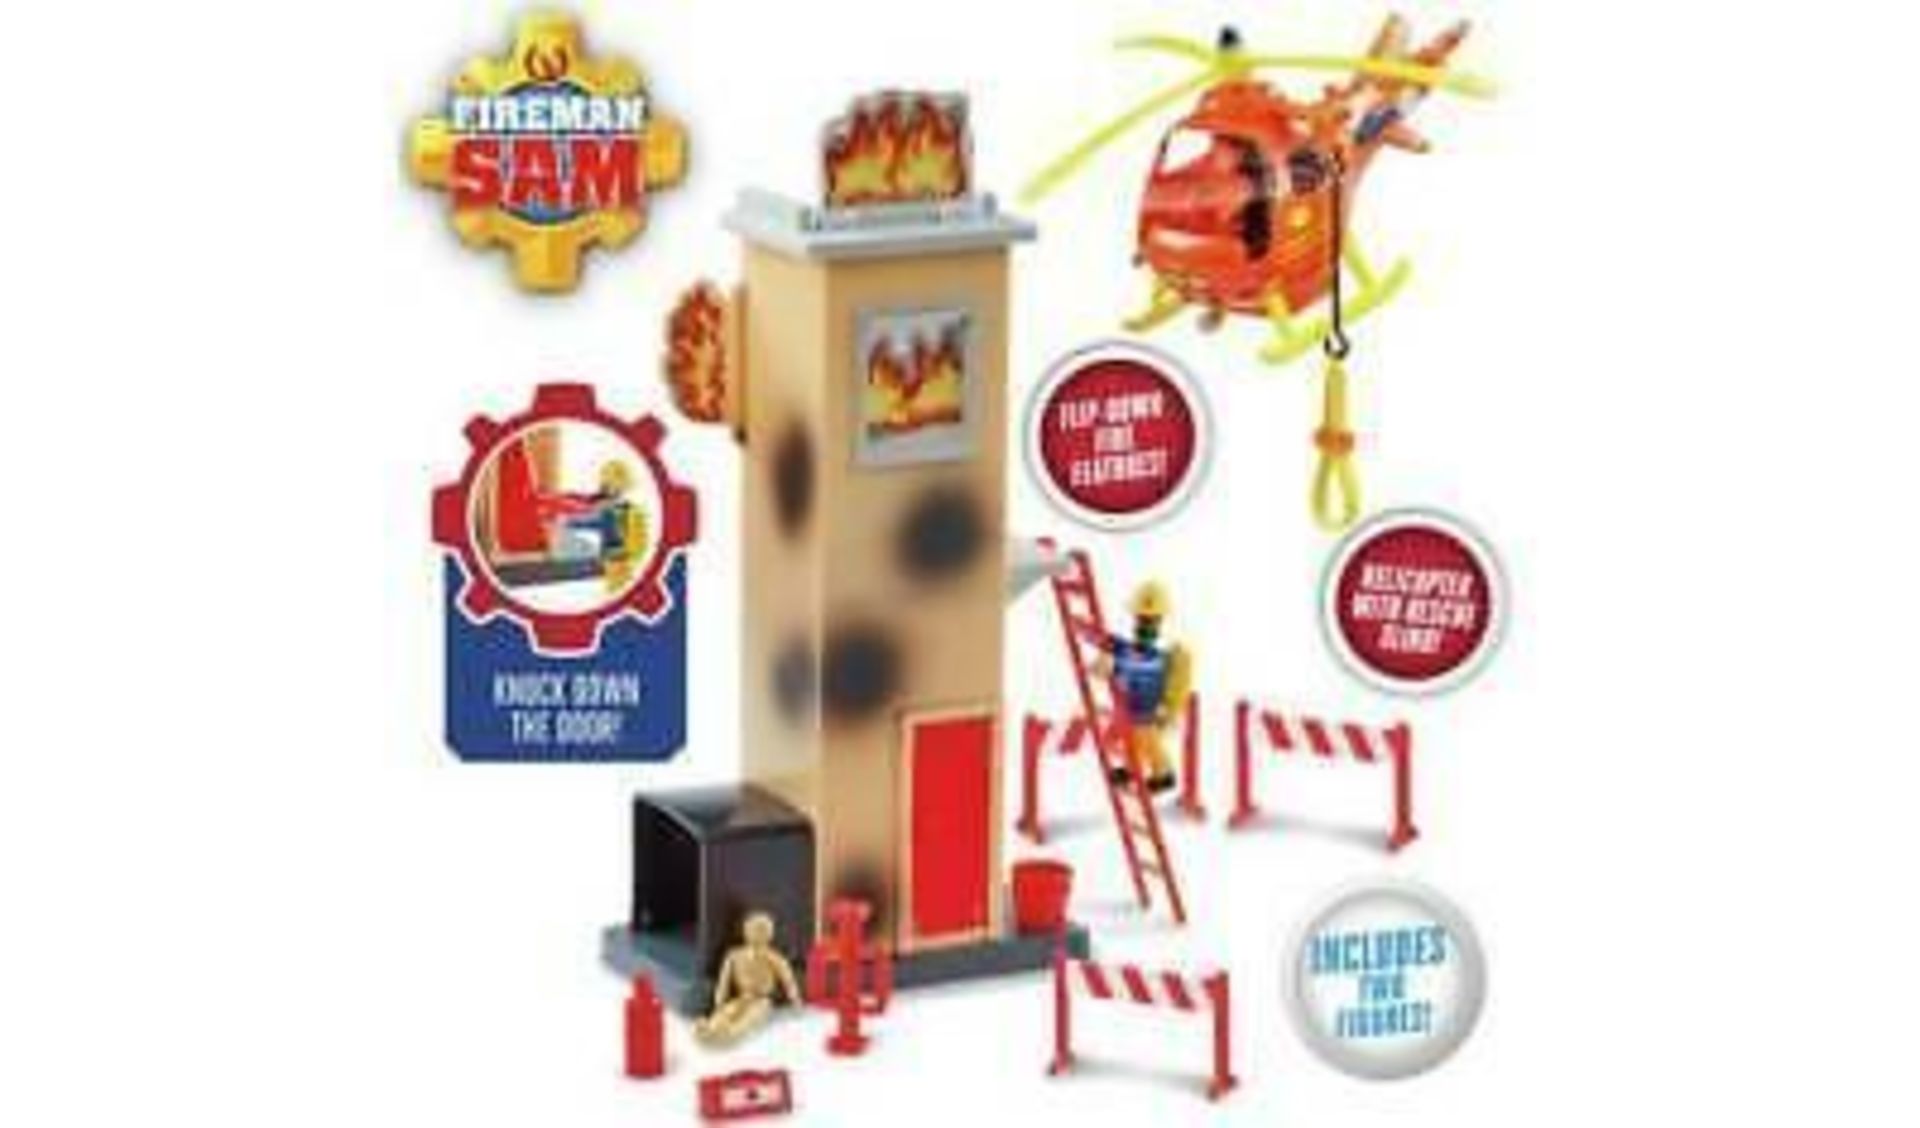 Fireman Sam Training Tower Playset - £15.00 RRP